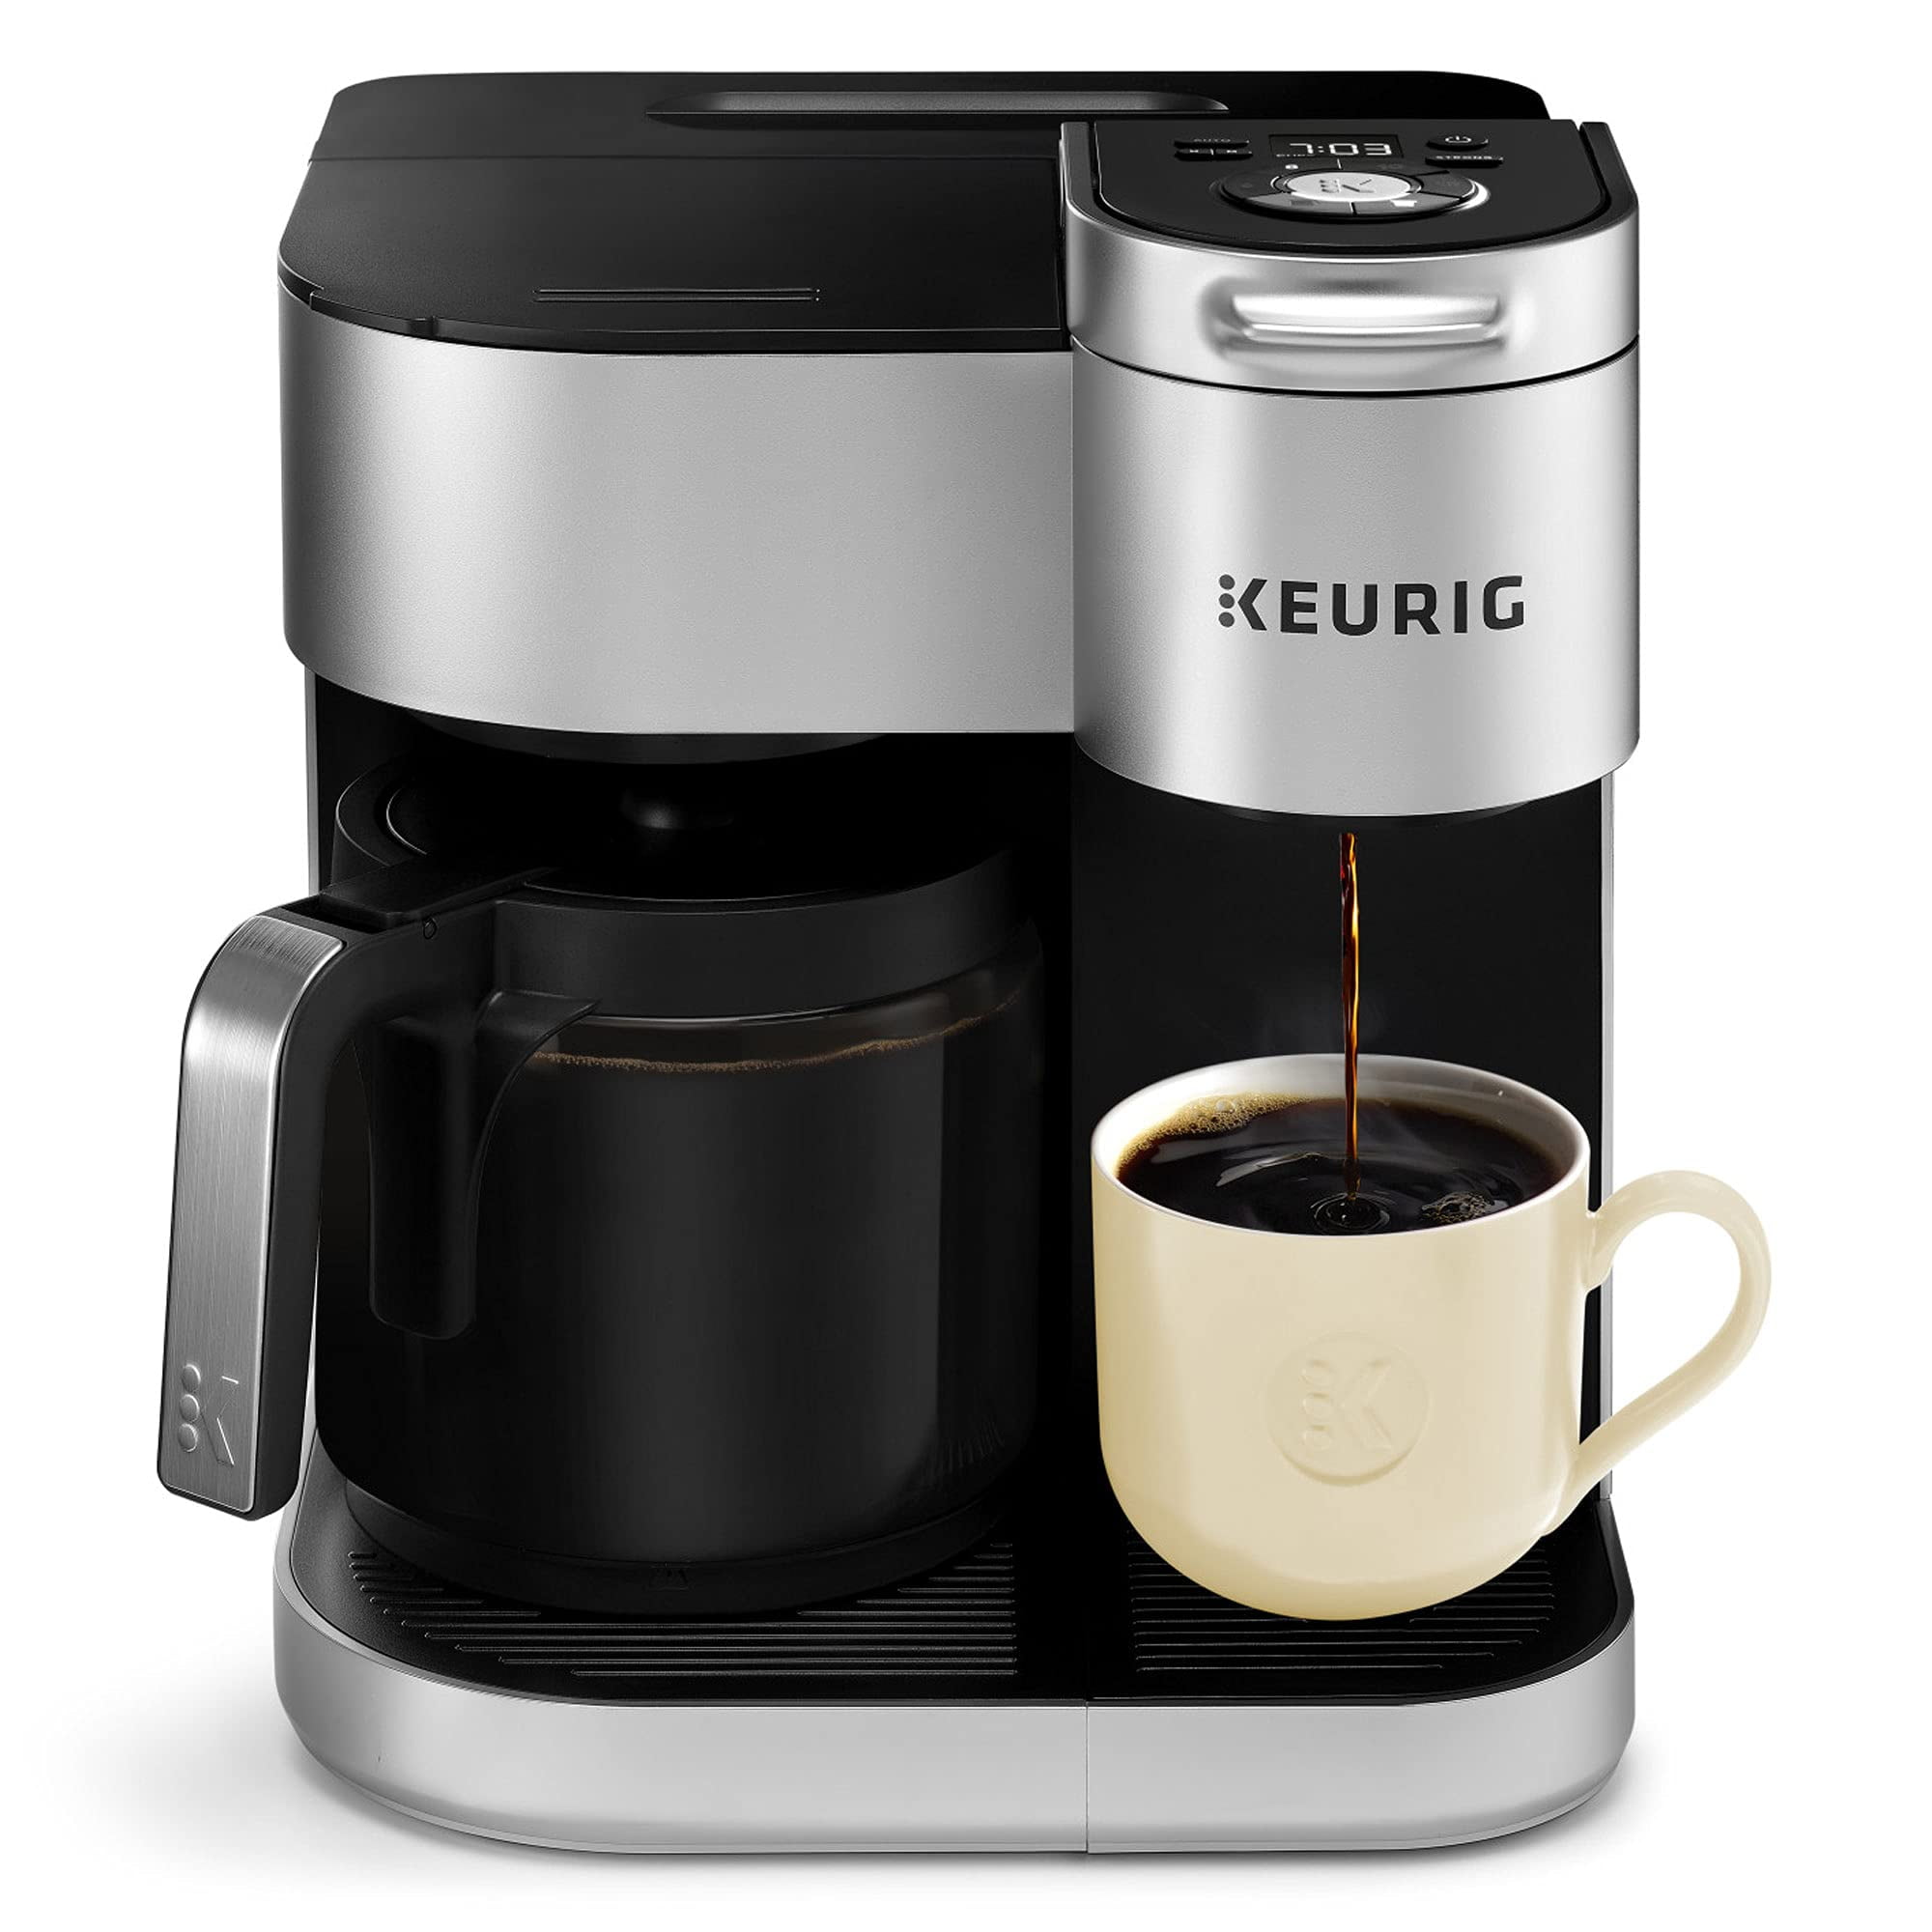 Keurig K-Duo Coffee Maker Review - Nesting Lane